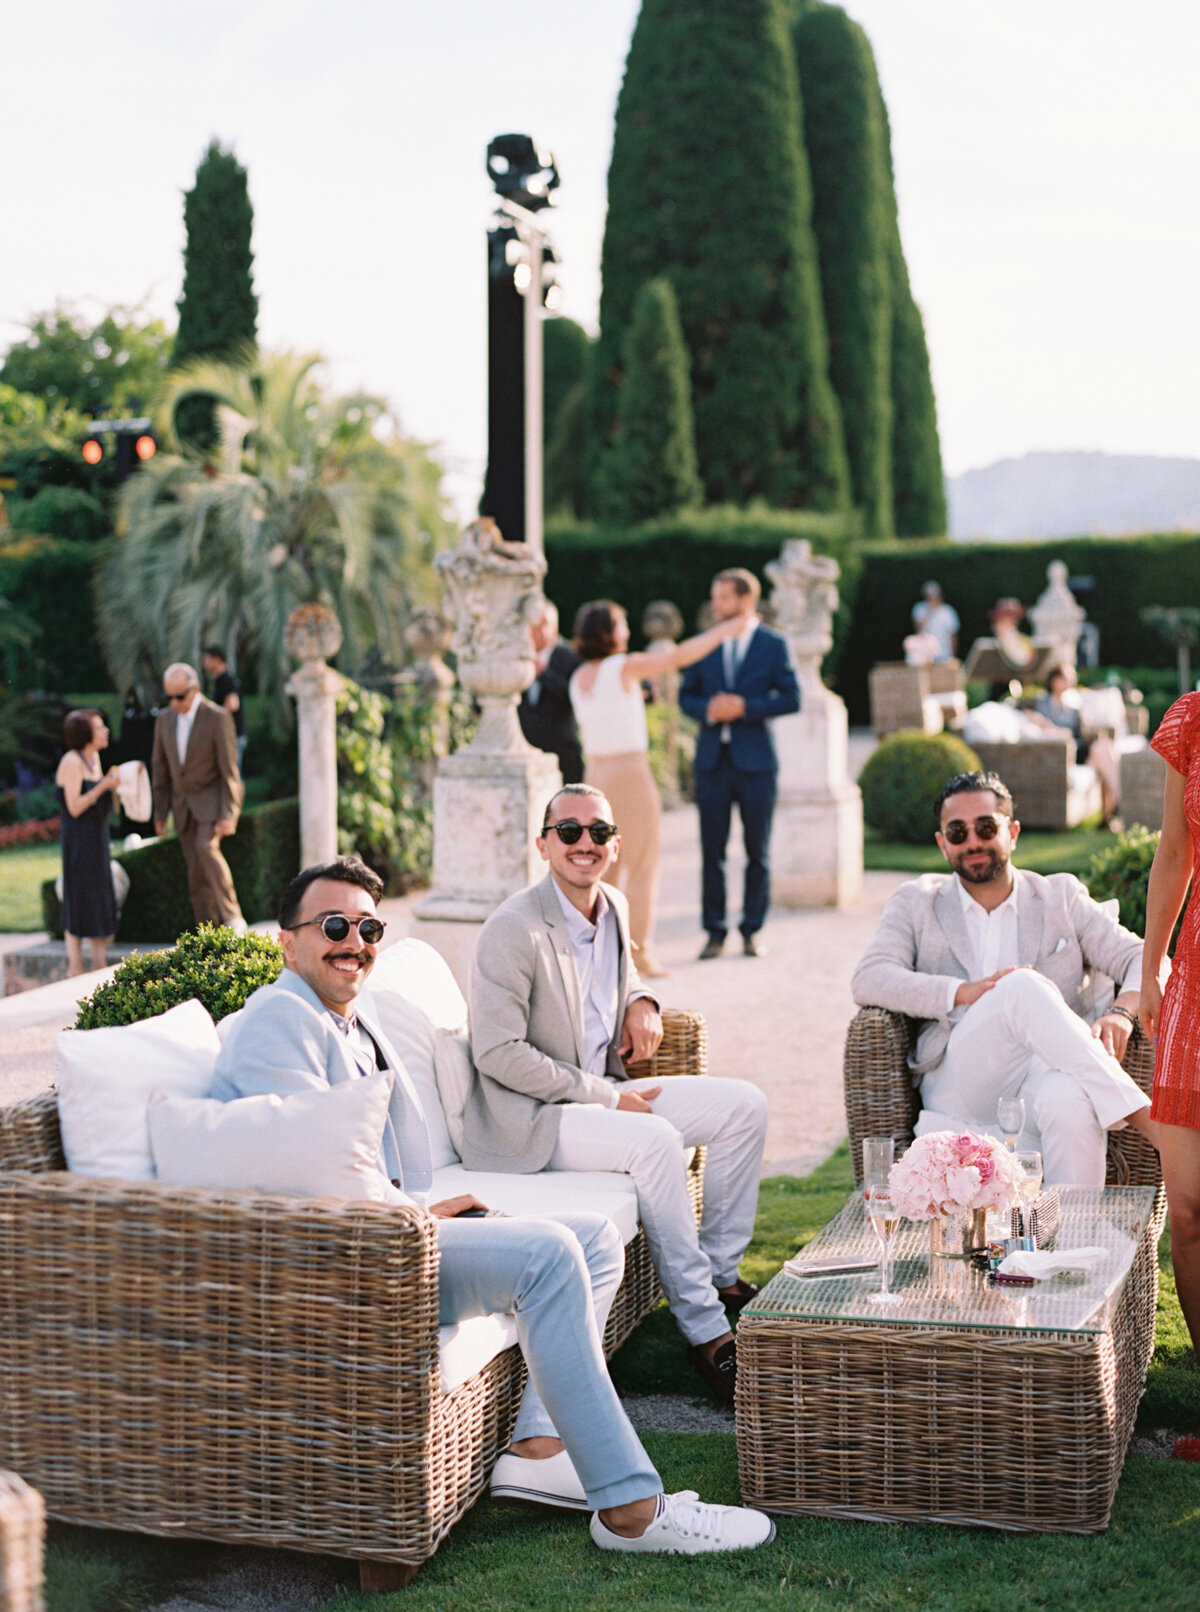 Villa-Ephrussi-de-Rothschild-Monaco-Nice-Saint Tropez-Welcome-Dinner-Katie-Grant-destination-wedding (27 of 37).jpg